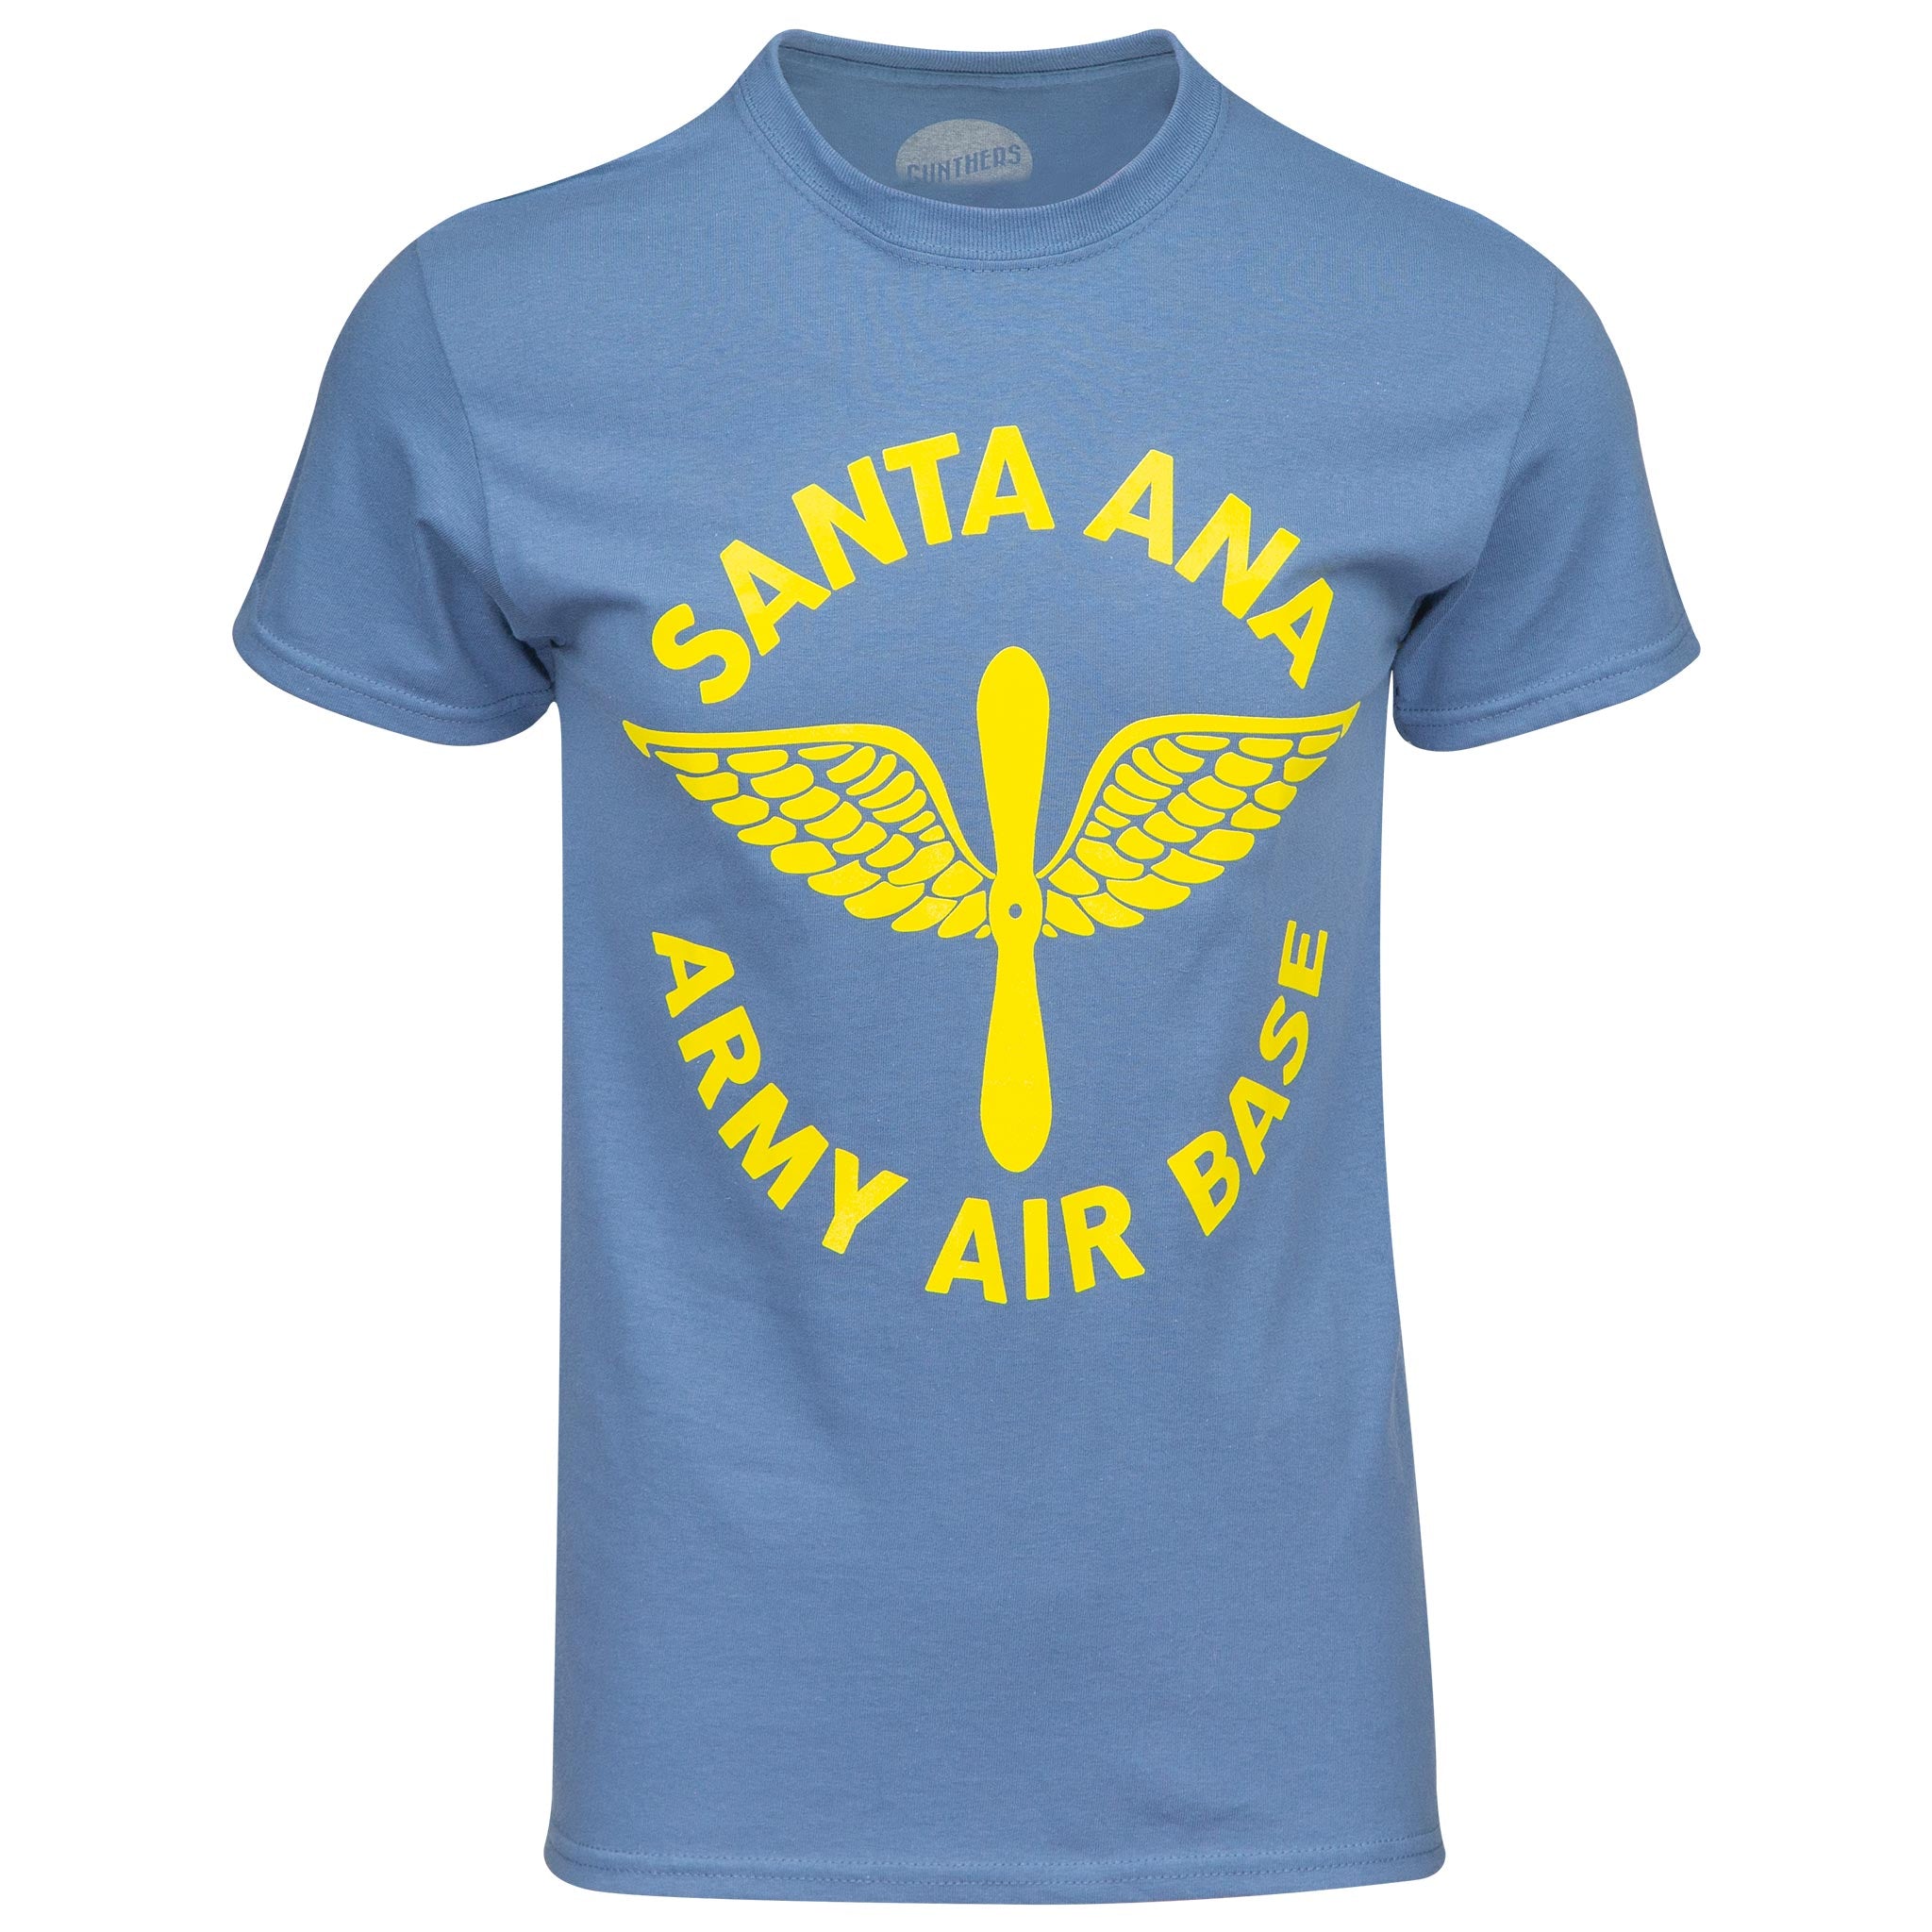 Santa Ana Army Air Base Tee